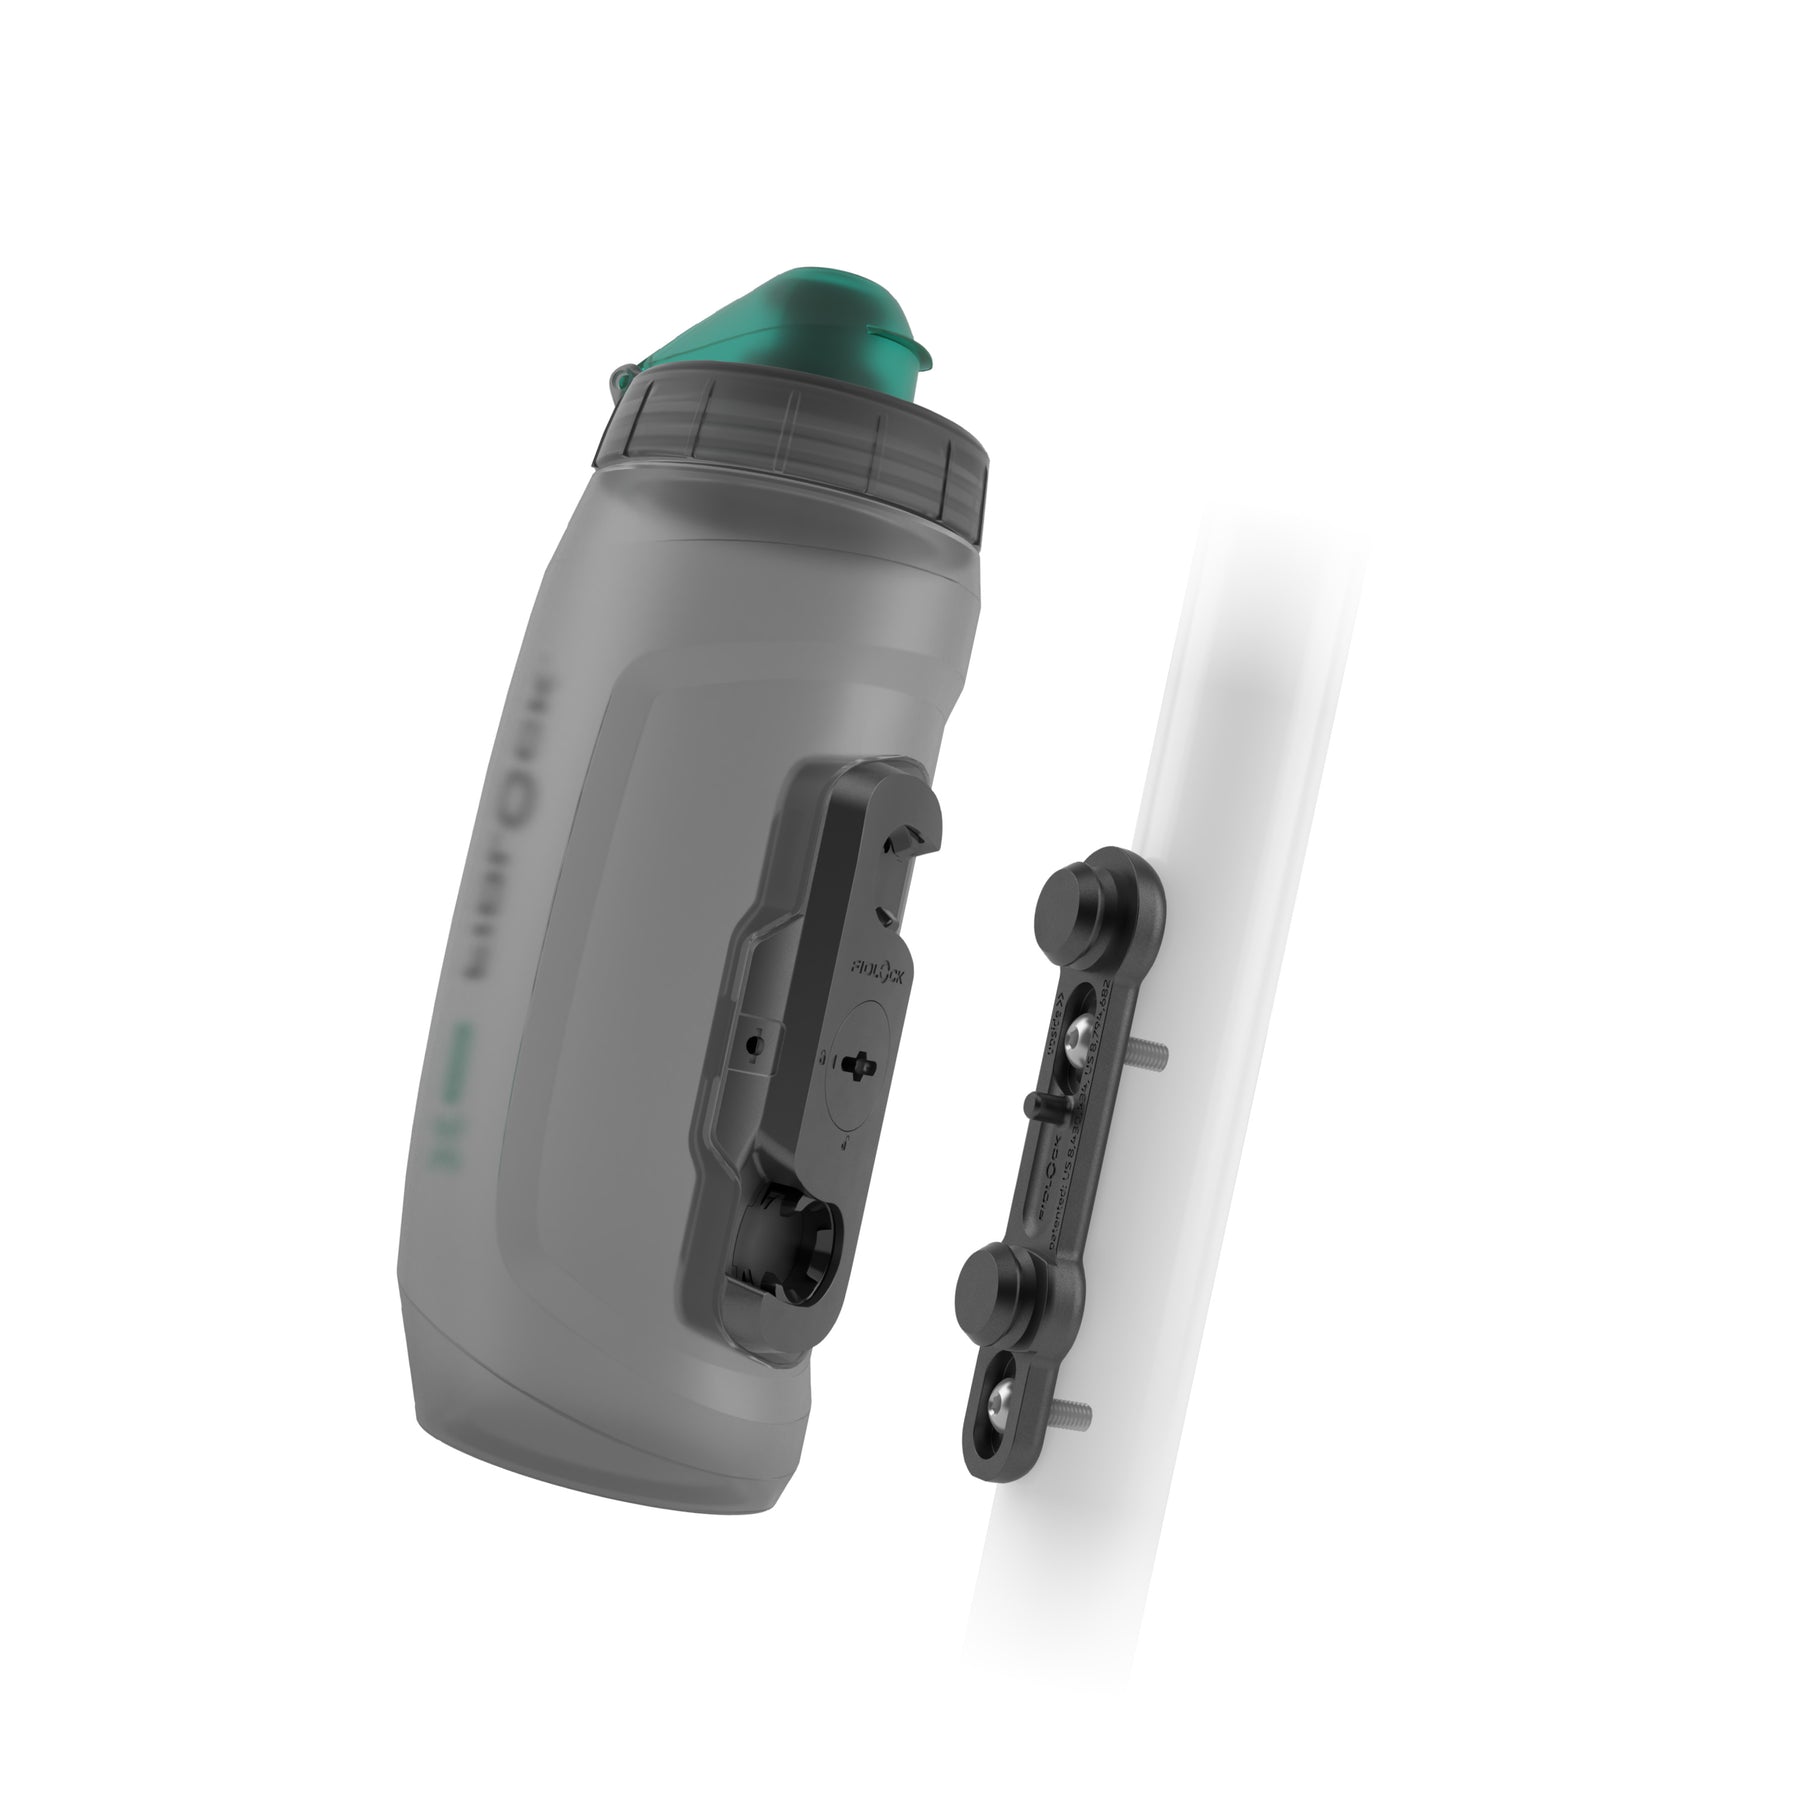 FIDLOCK Twist Bottle 590 Set- Bike Water Bottle Holder with Attached Bottle  - Cage Free Magnetic Mount - Clear Smoke